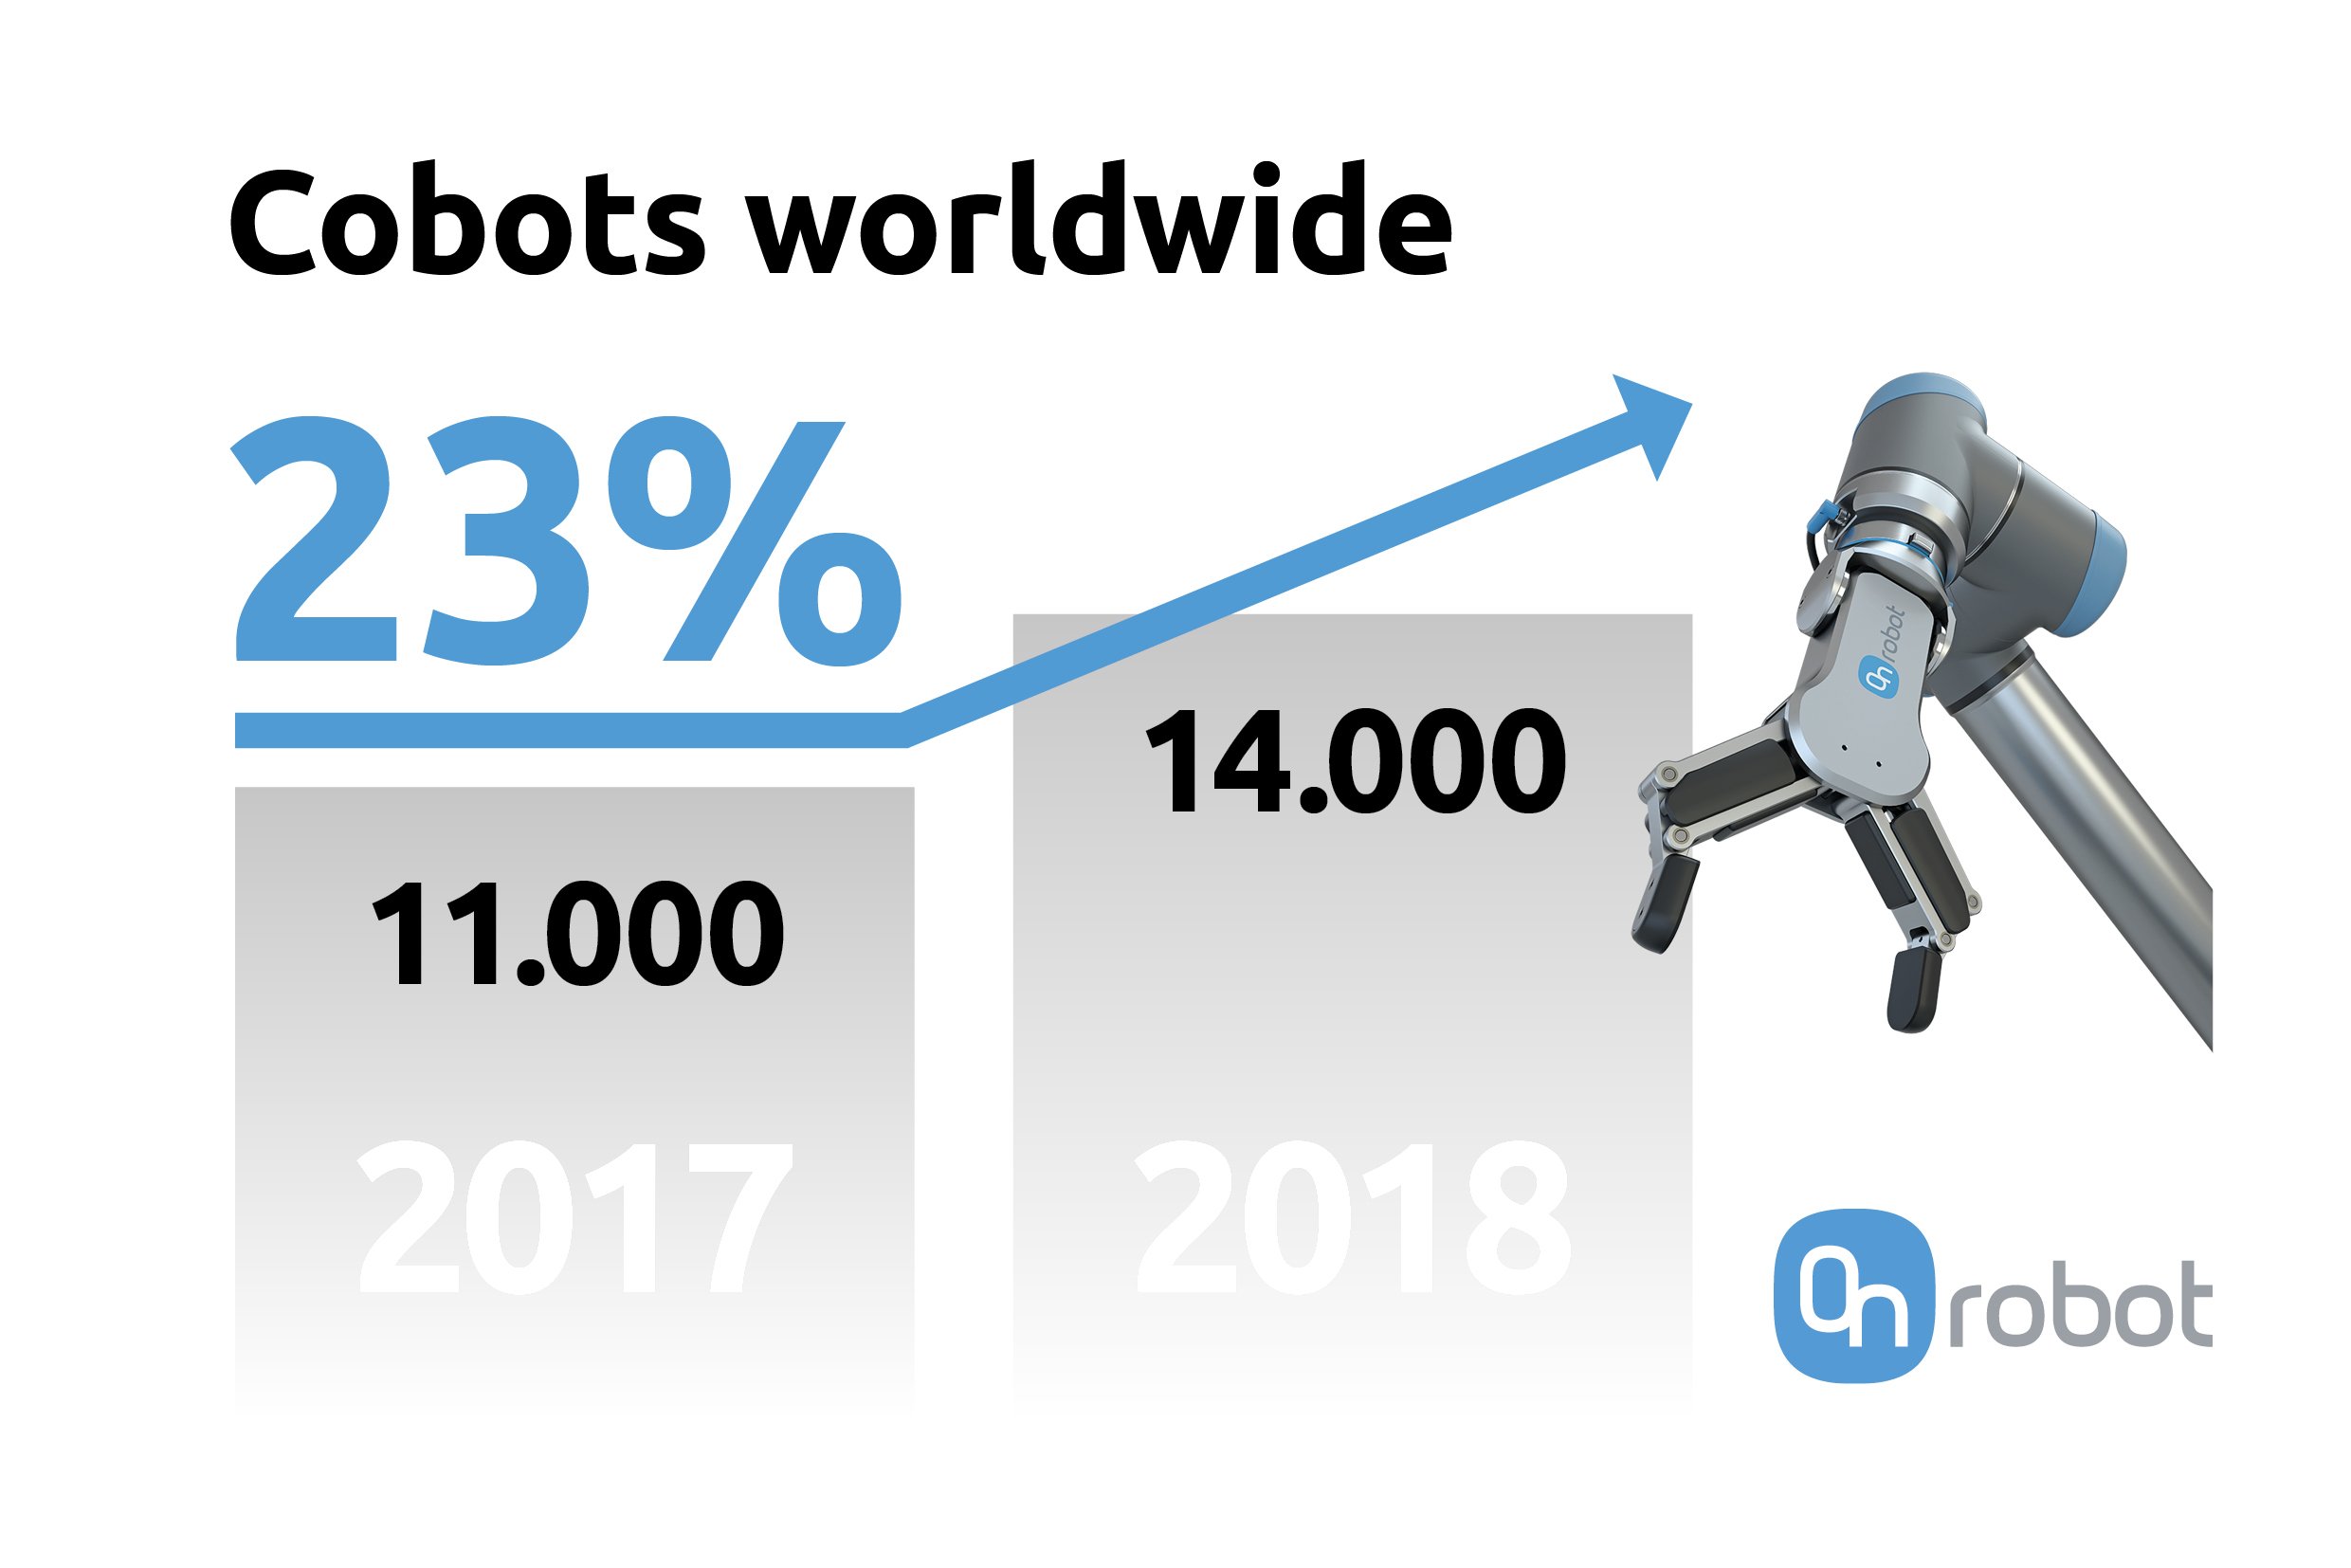 The IFR's latest World Robotics report shows an upward trend for cobots. Source: OnRobot